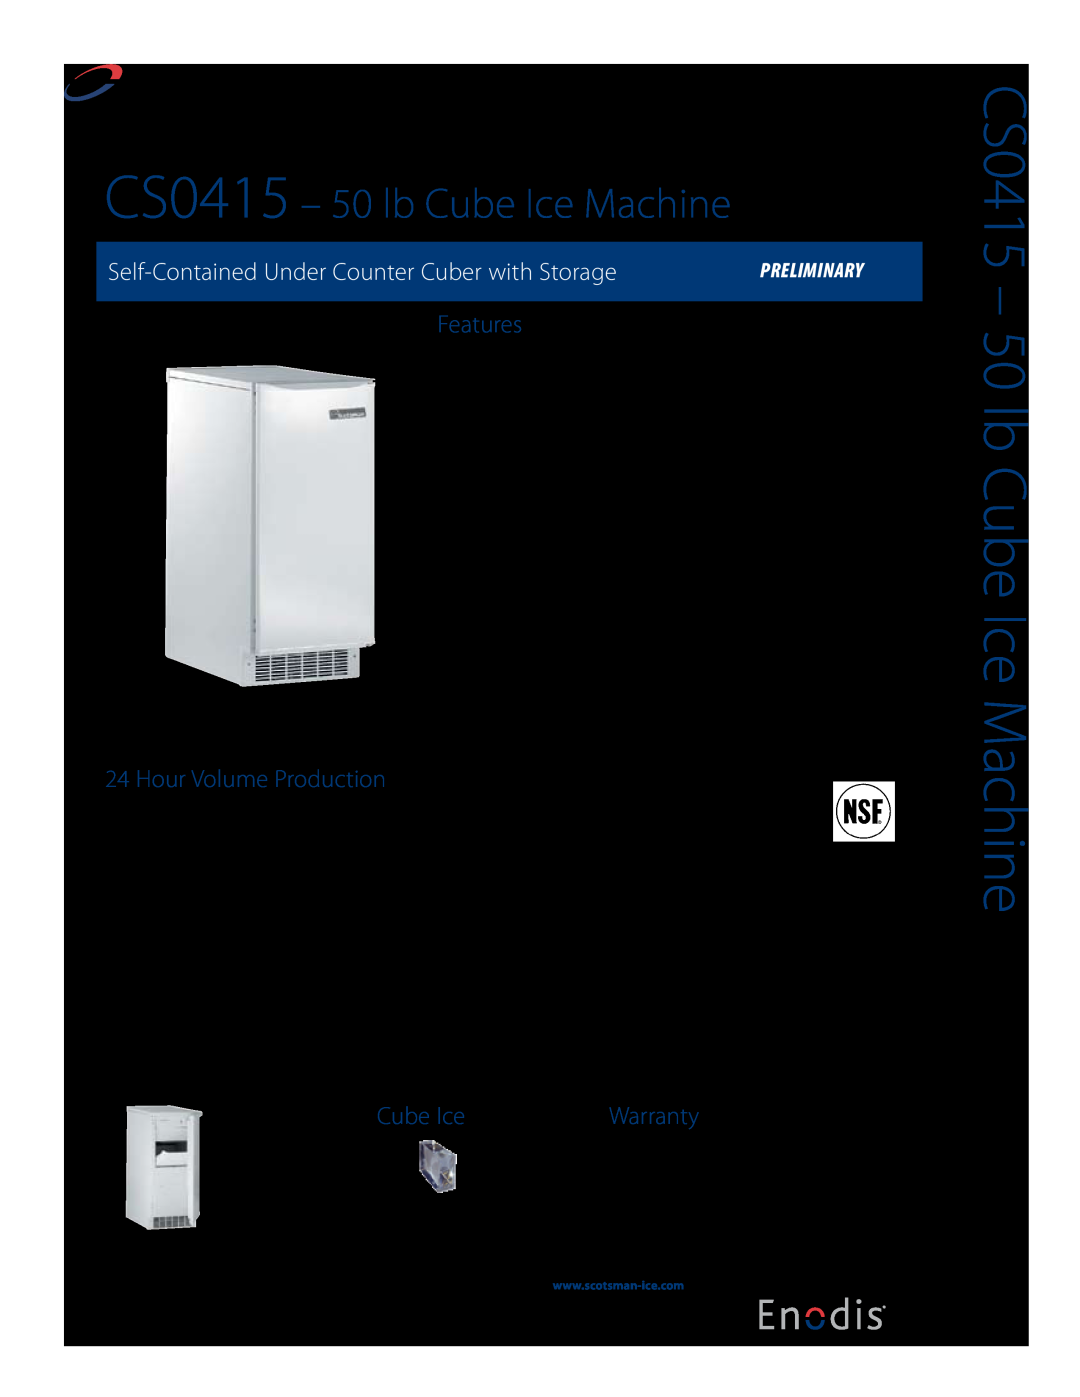 Scotsman Ice warranty Features, Hour Volume Production, Warranty, CS0415 - 50 lb Cube Ice Machine 